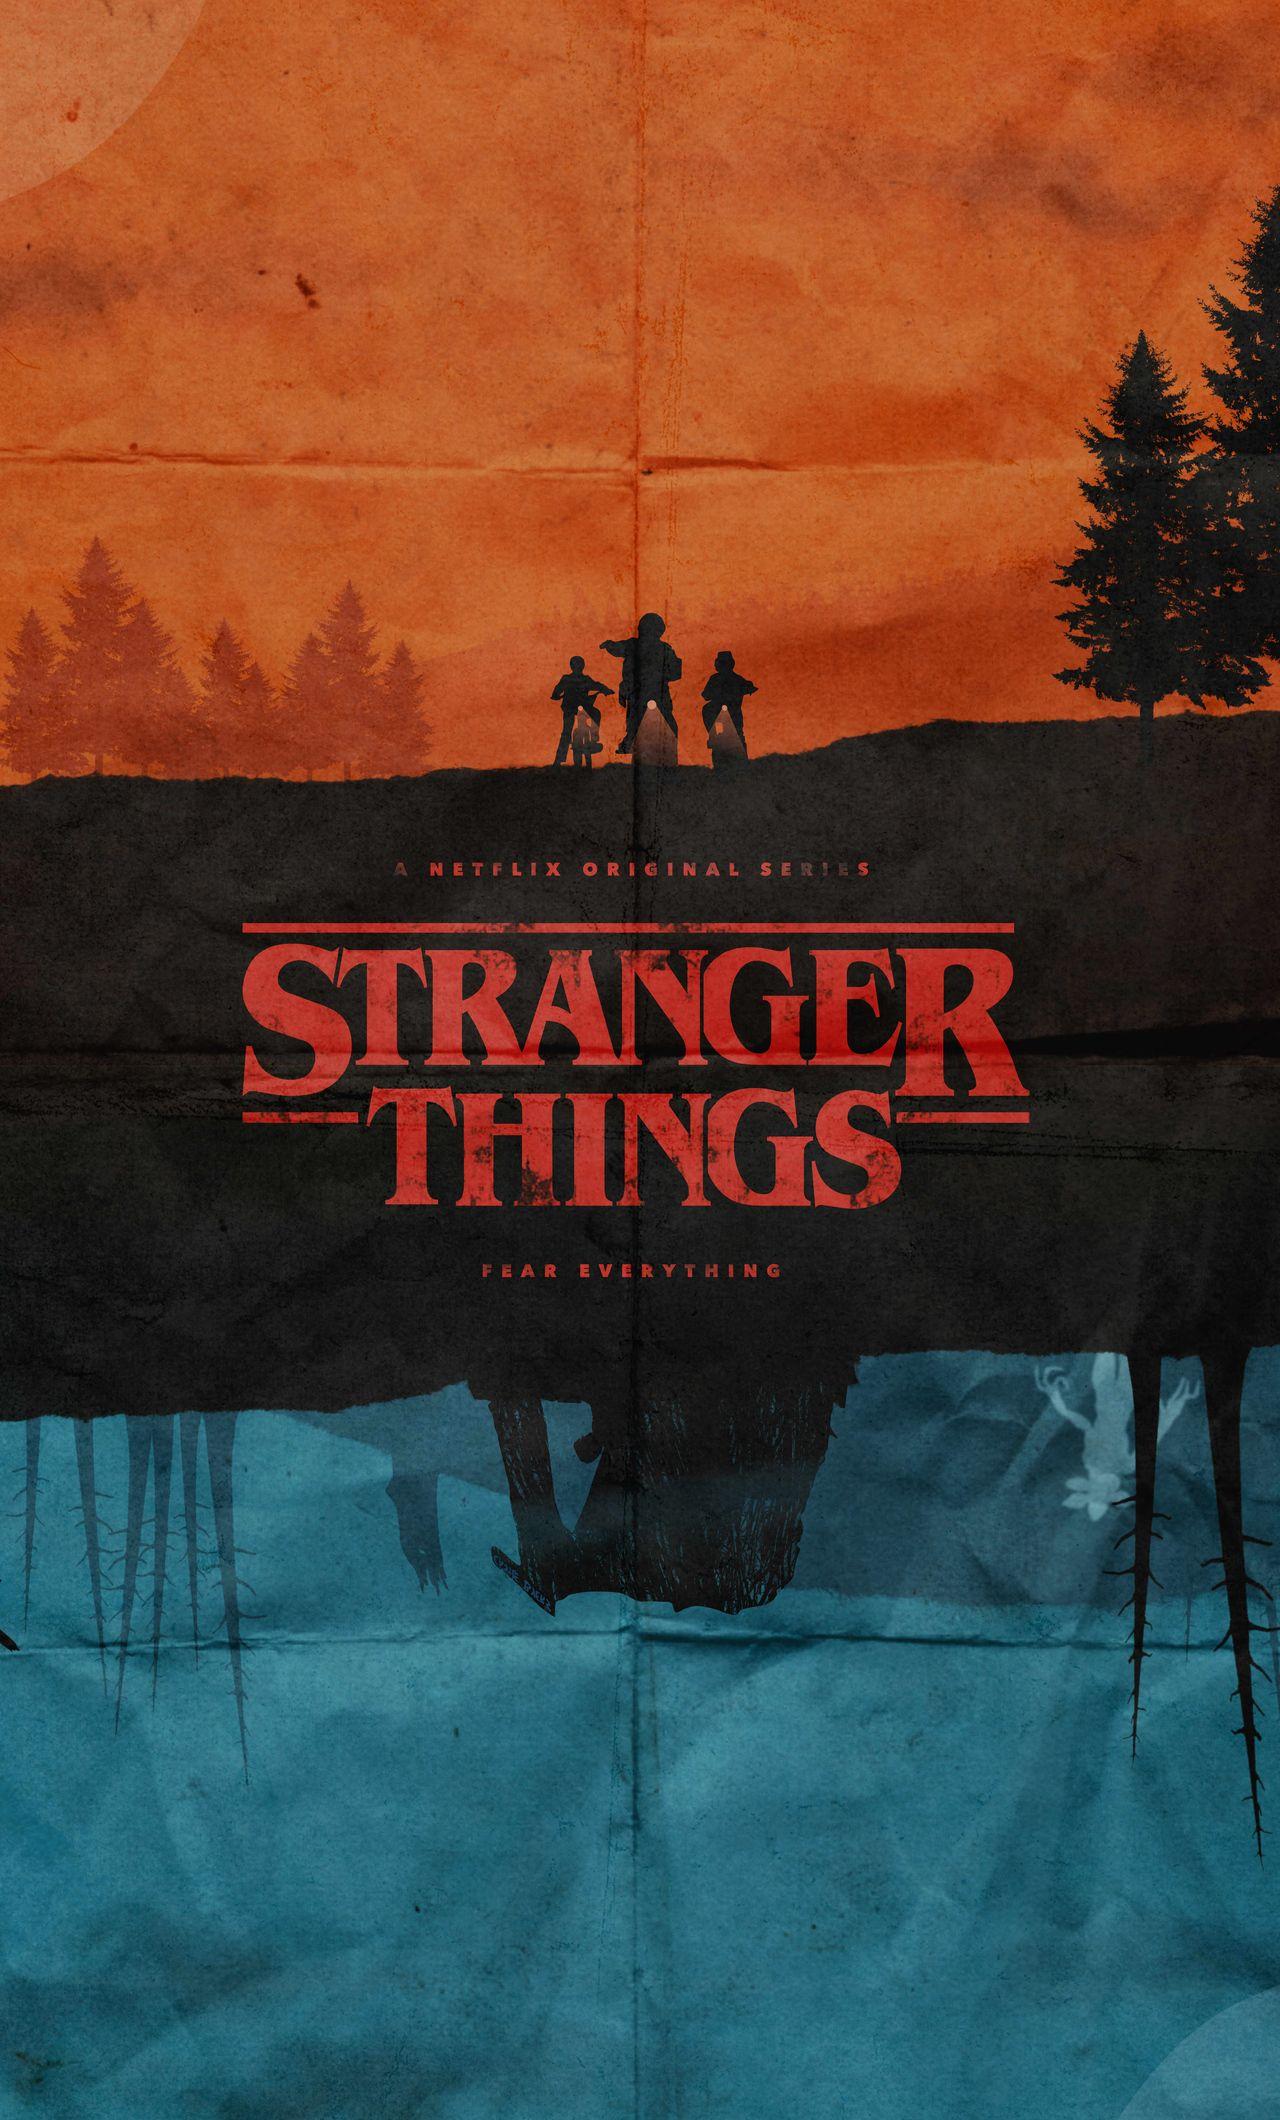 Stranger Things Poster Wallpapers - Top Free Stranger Things Poster ...